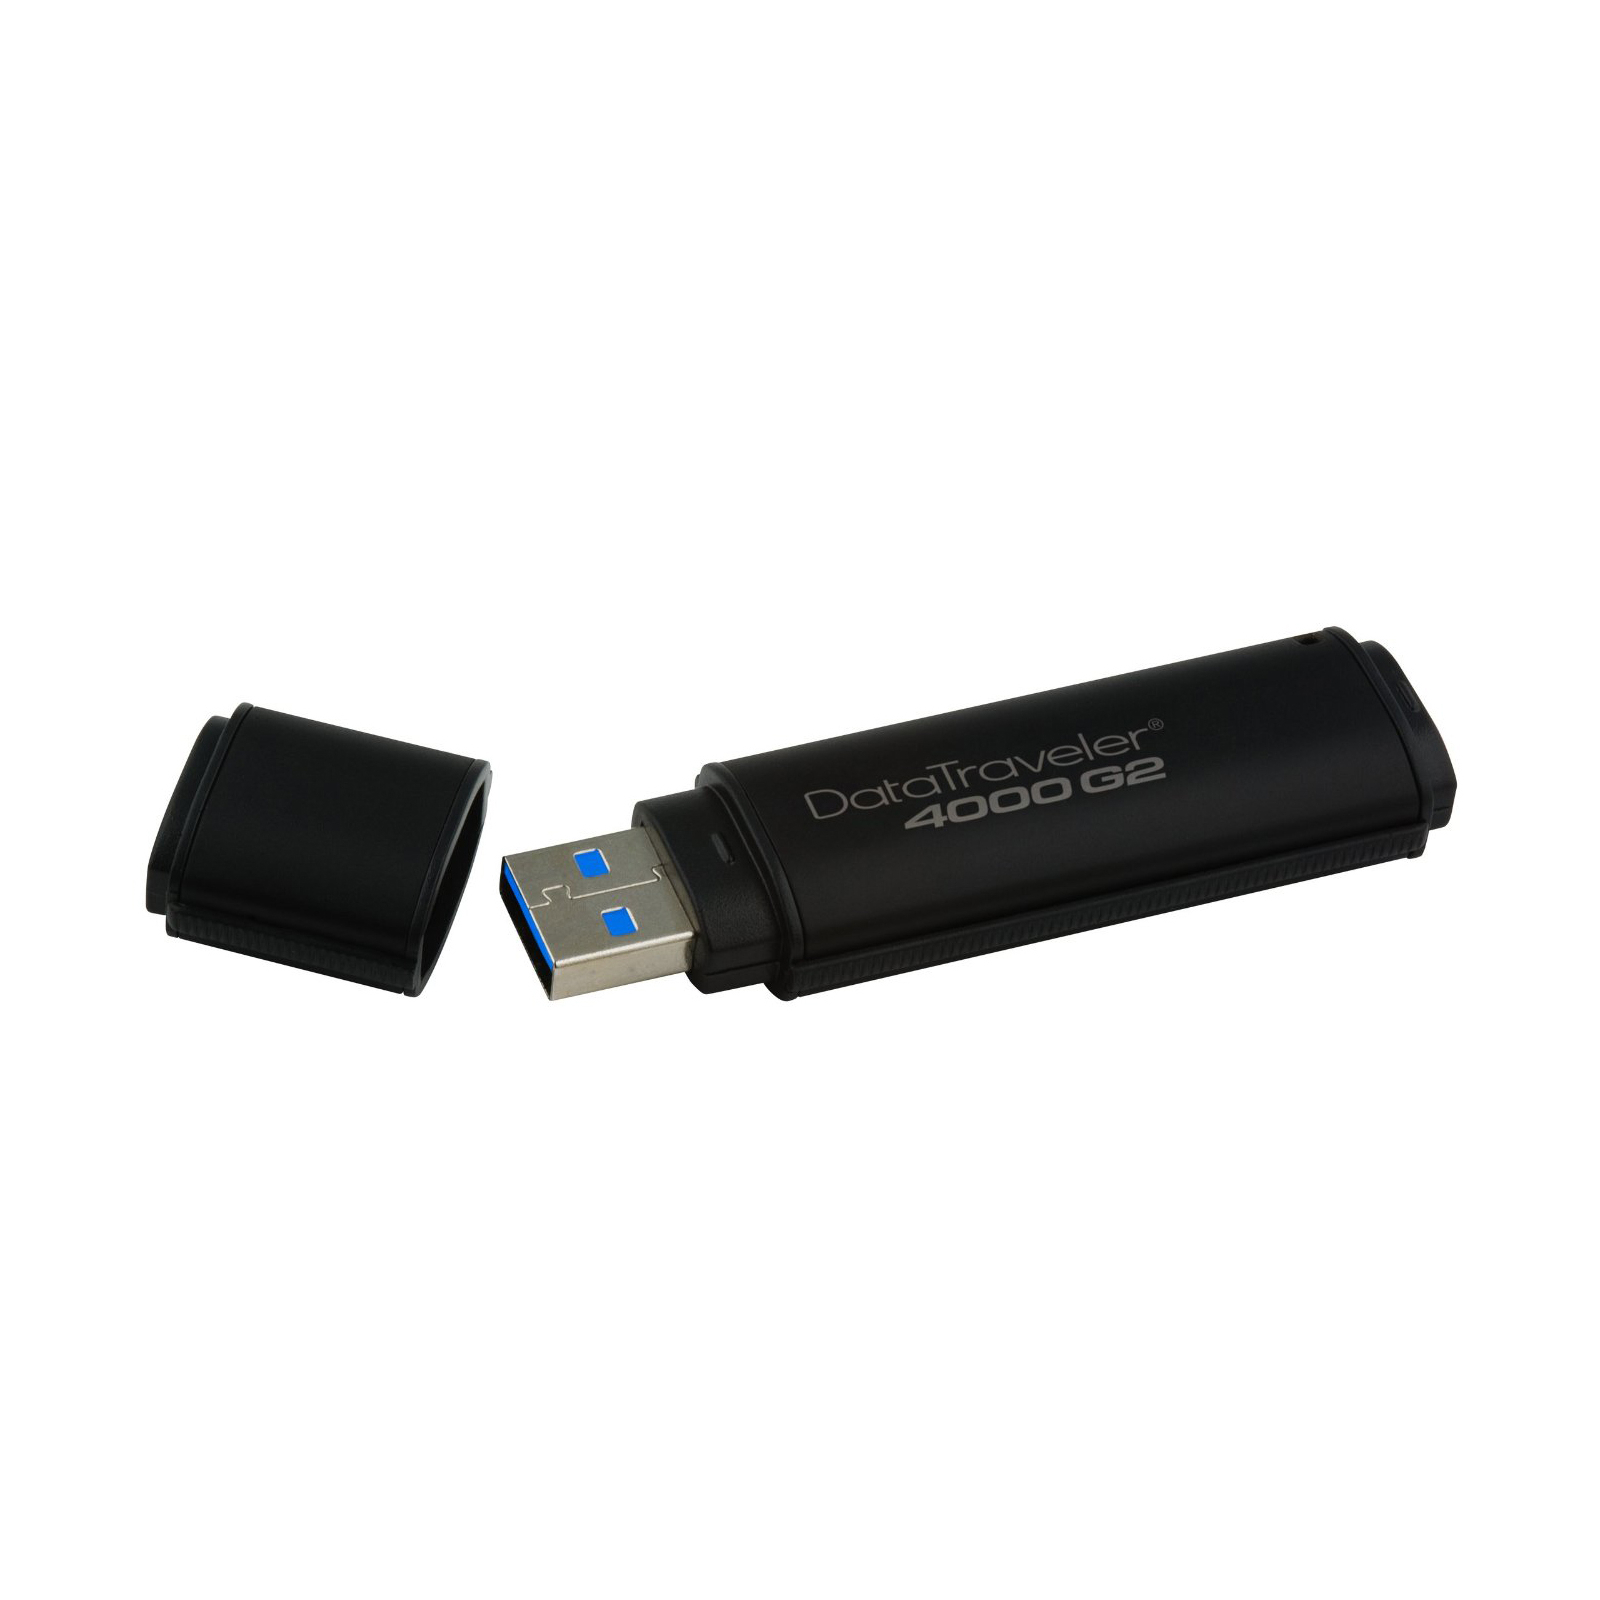 USB флеш накопитель Kingston 8GB DataTraveler 4000 G2 Metal Black USB 3.0 (DT4000G2/8GB) изображение 3